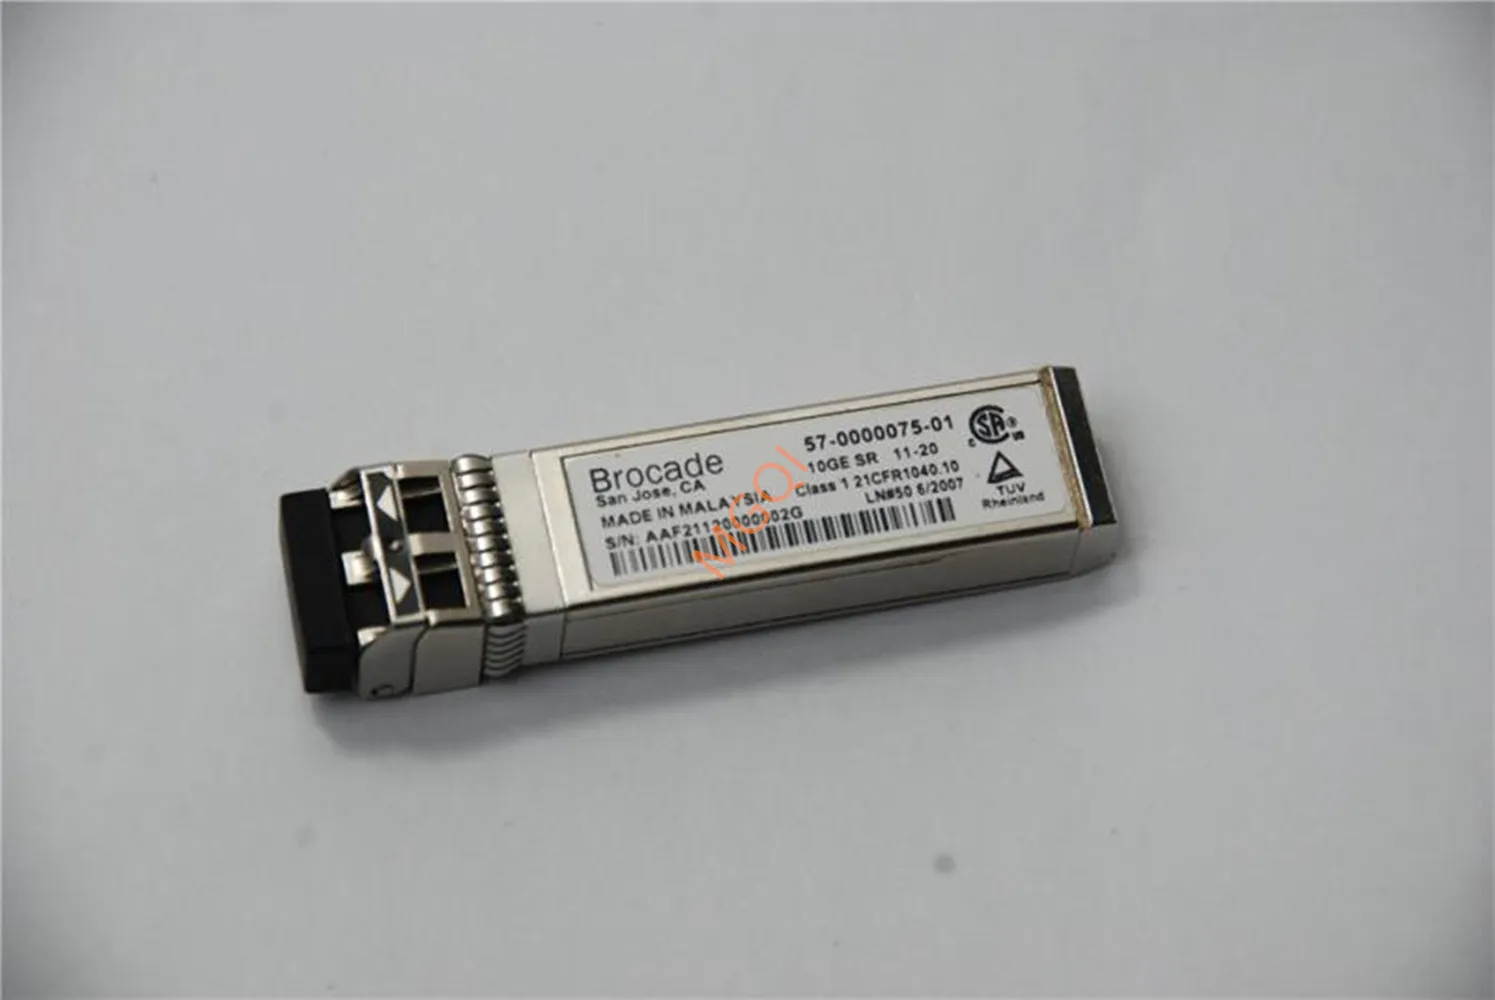 Brocade 10GB Transceiver 57-0000075-01/850nm 300M 10G SR SFP/Network Adapter Switch Optical Fiber Module/Switches Port Module